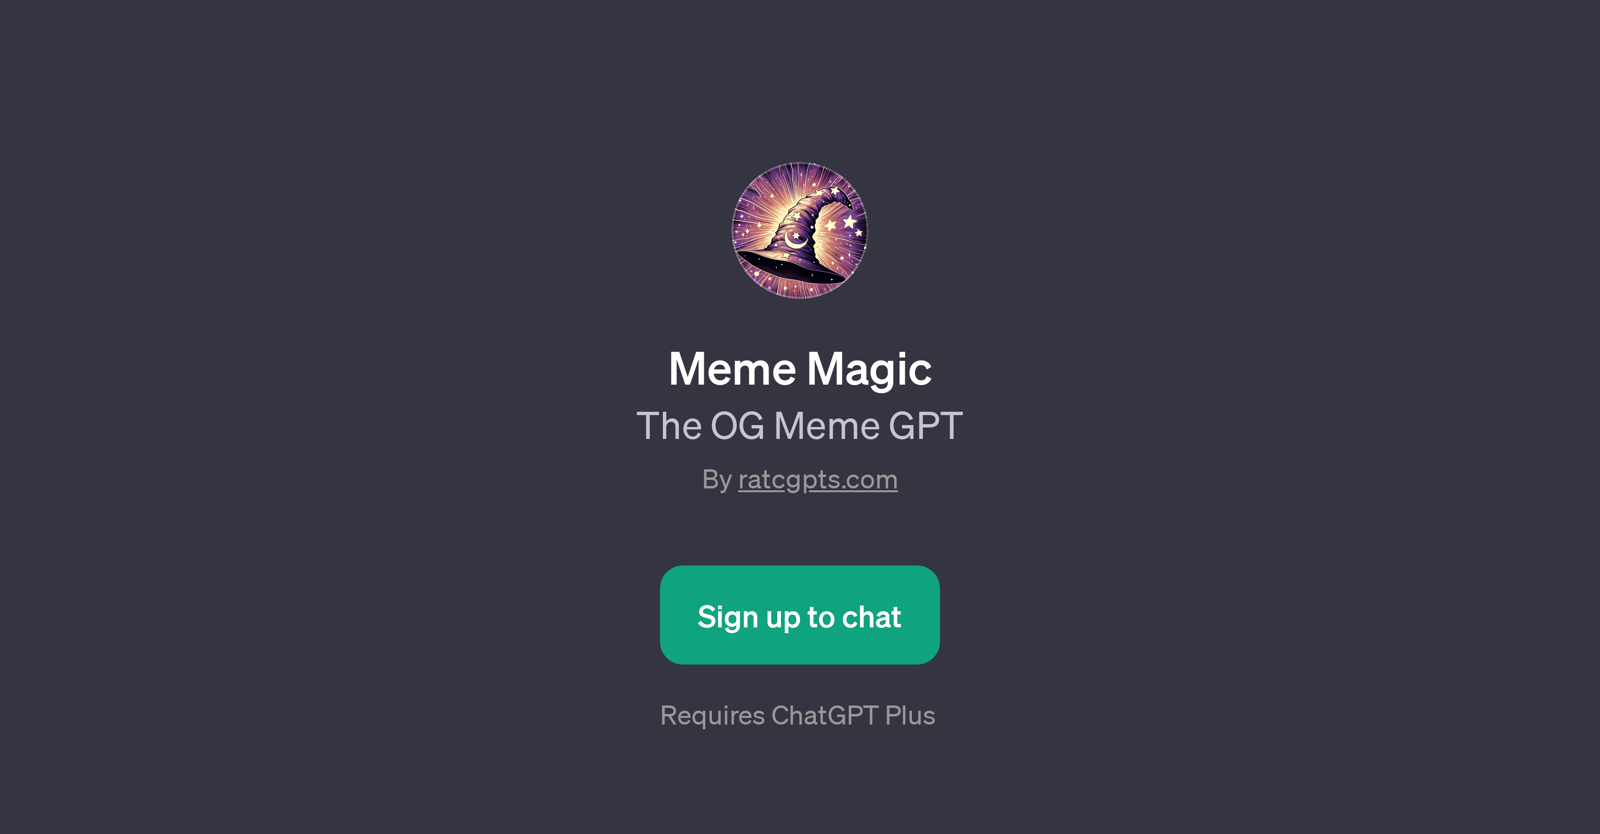 Meme Magic website